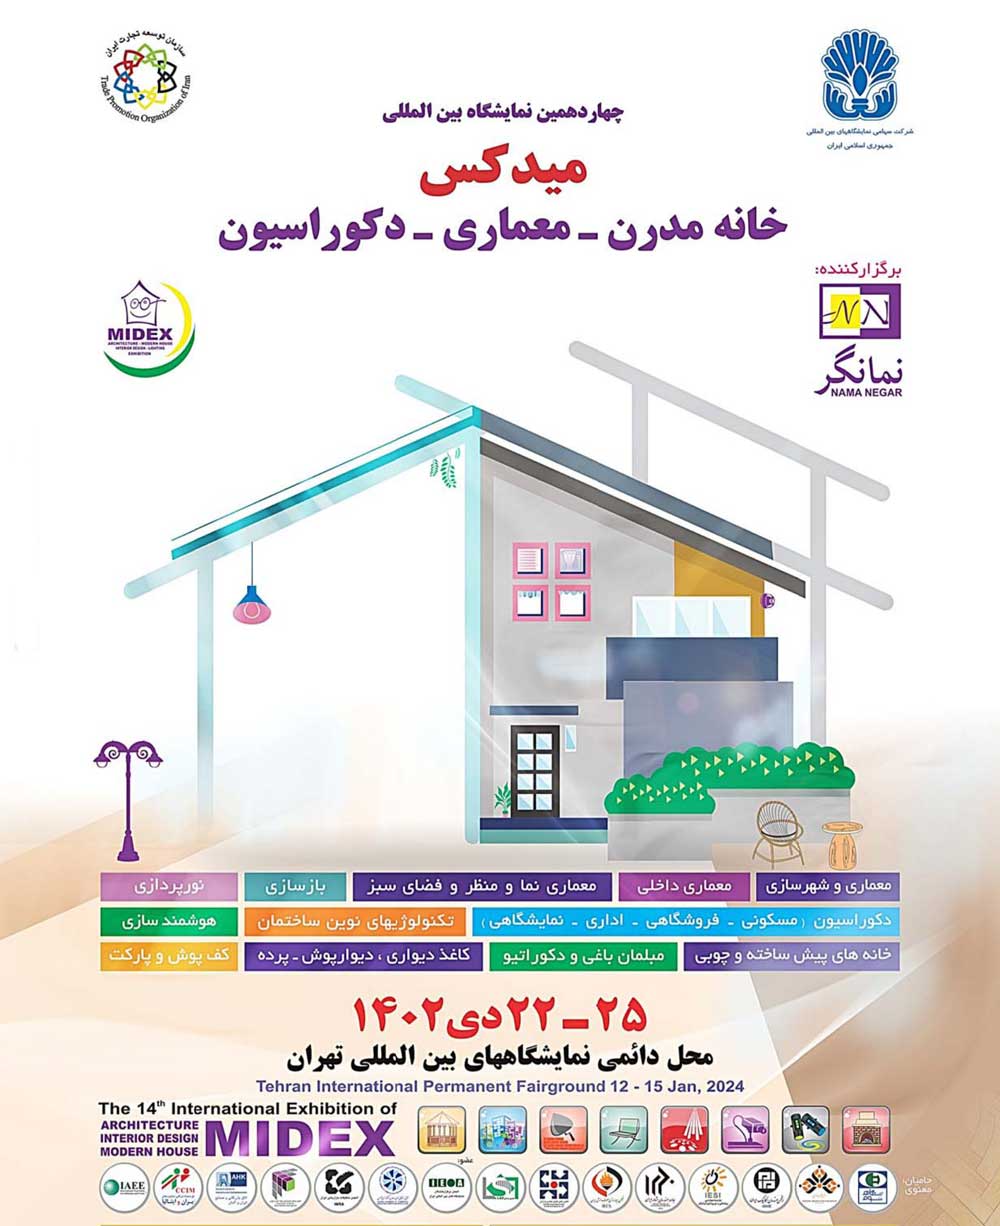 Midex poster 1402 - The 14th International Architecture and Interior Design (MIDEX) Exhibition 2023 in Iran/Tehran